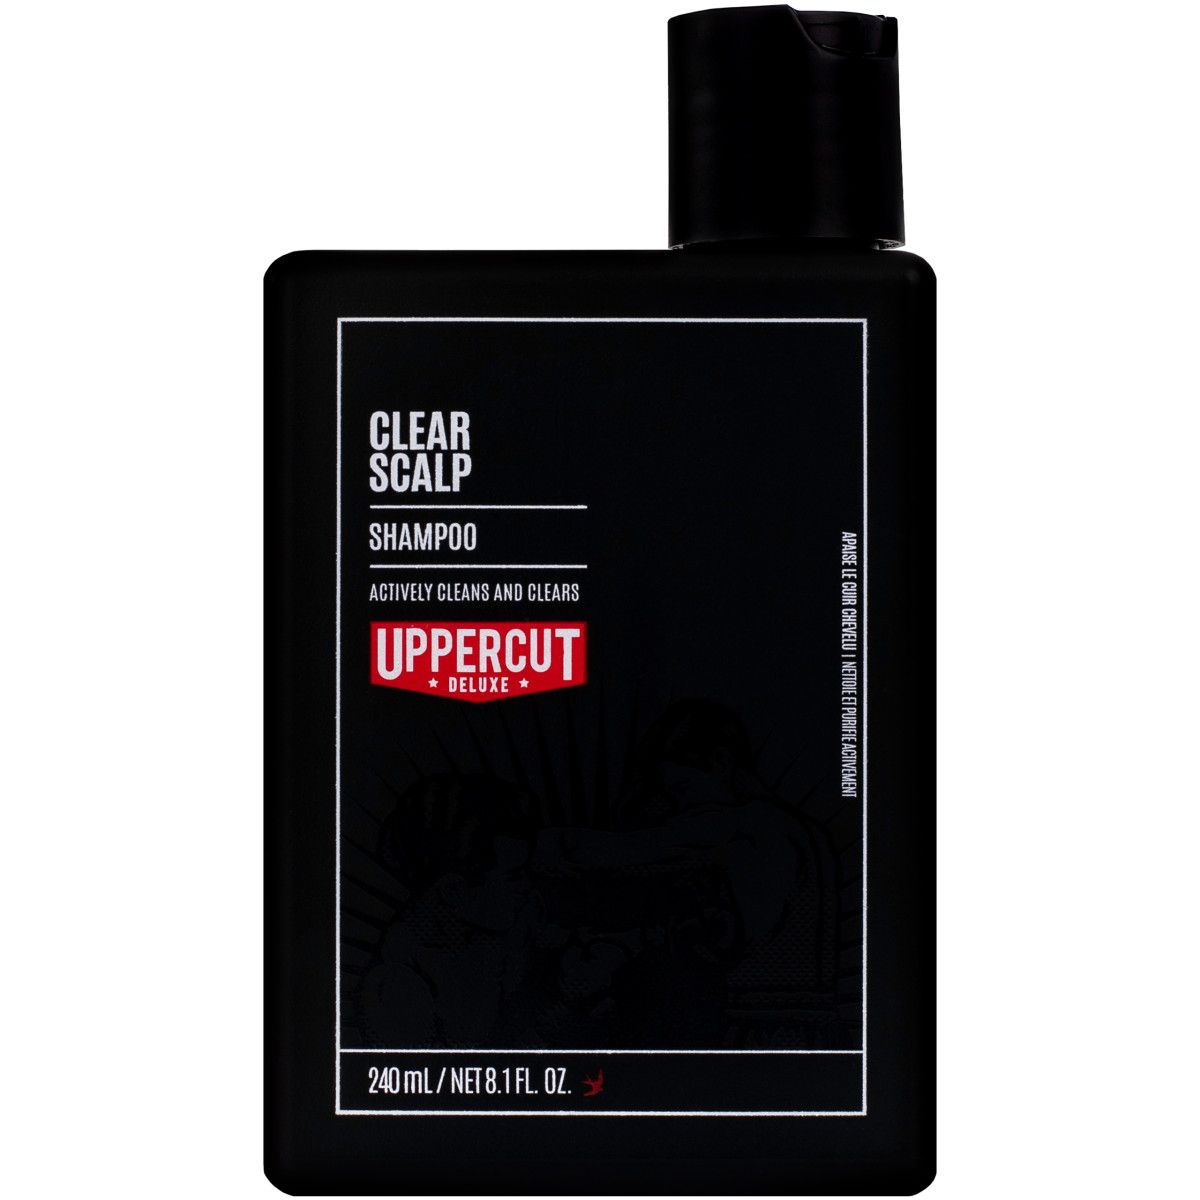 szampon clear producent